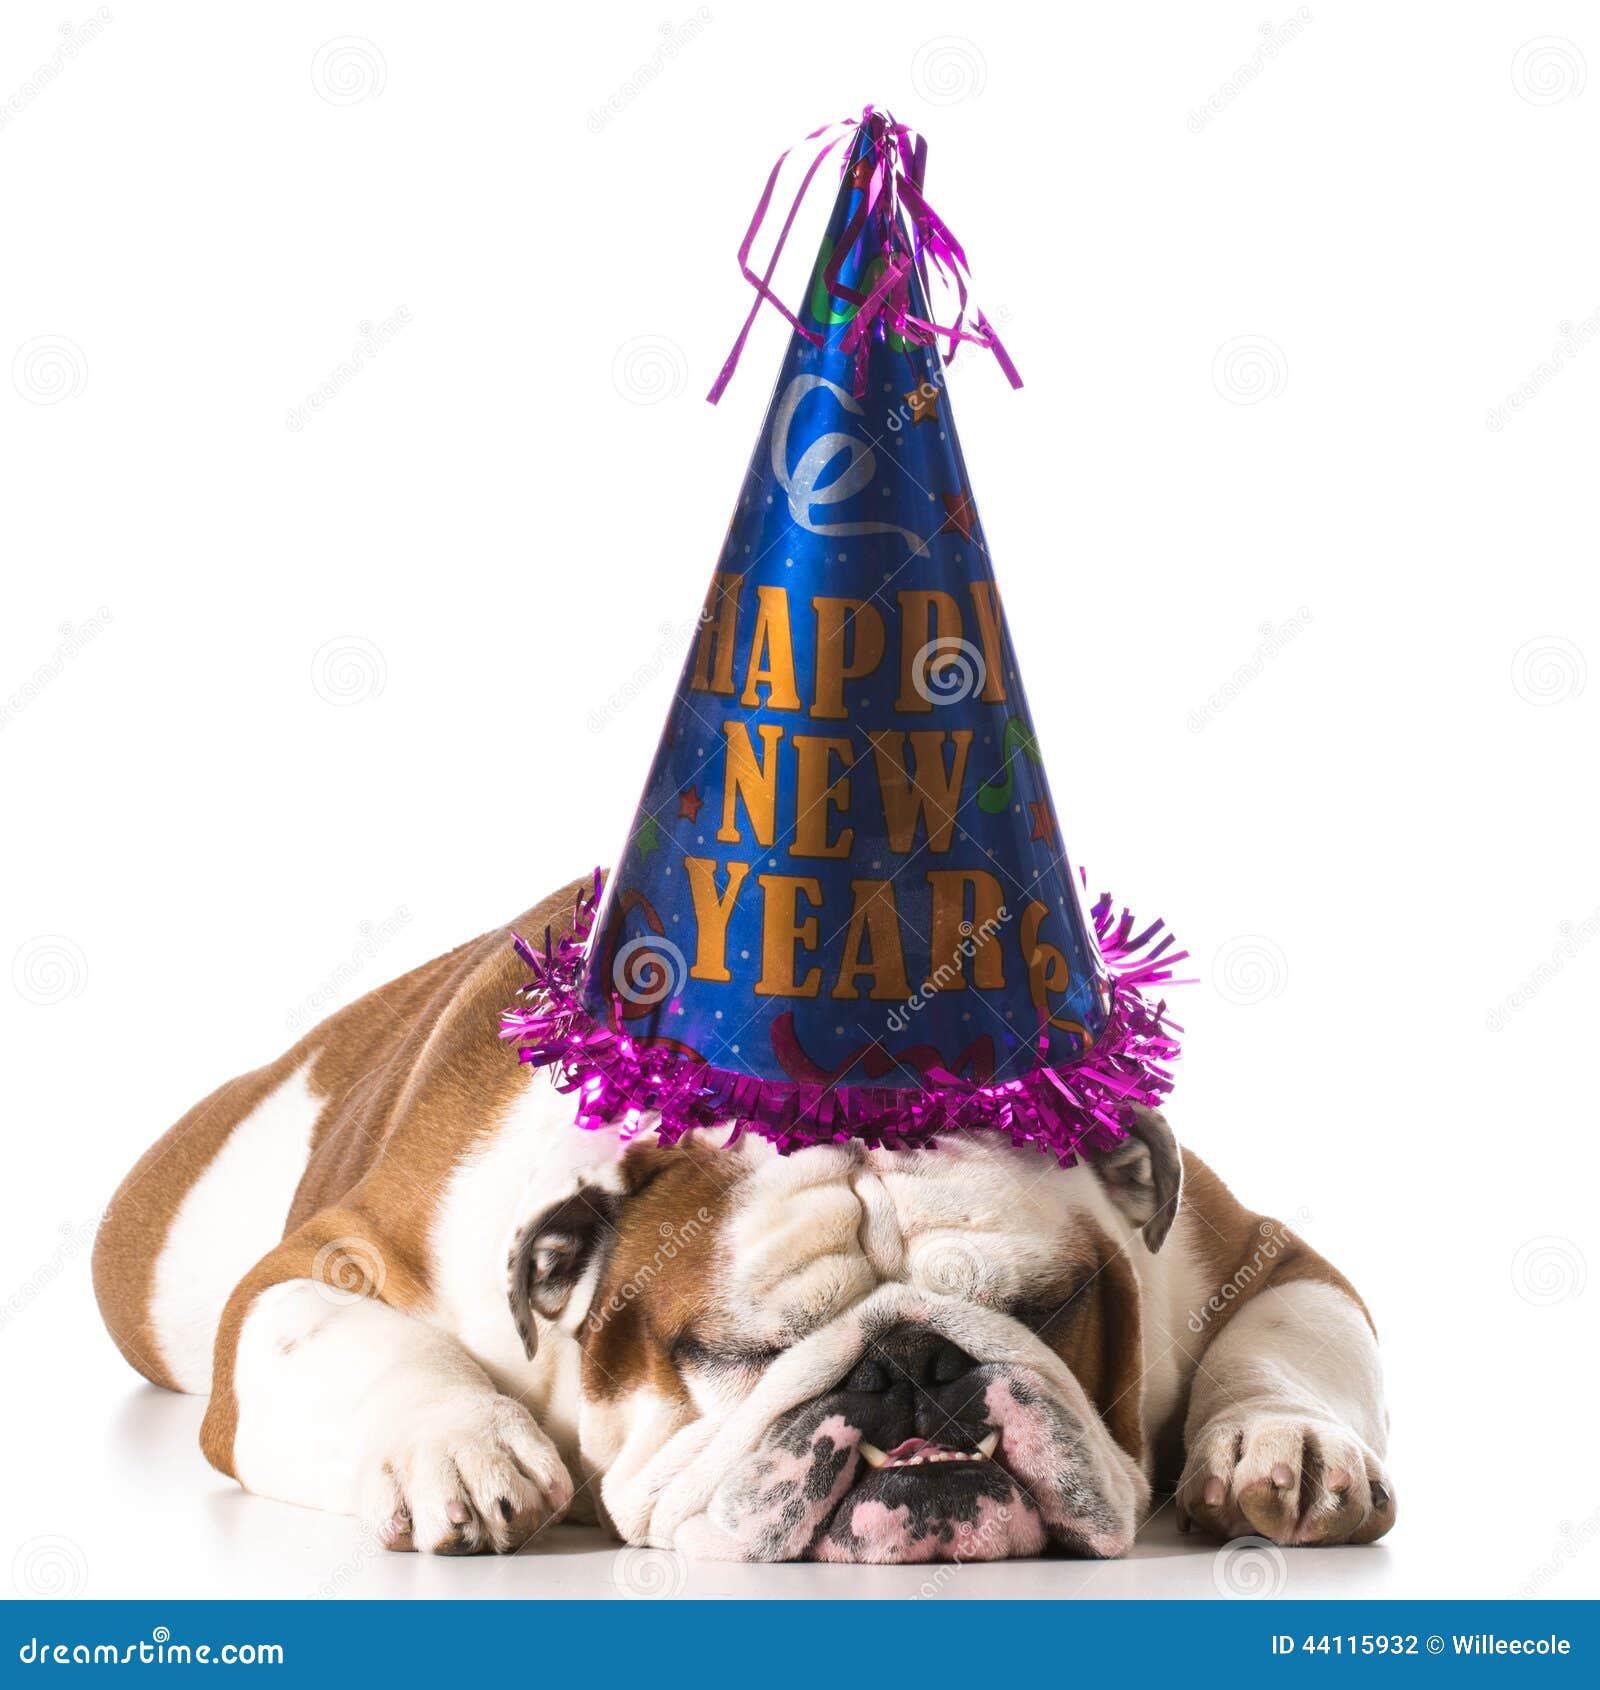 happy new year dog clipart - photo #50